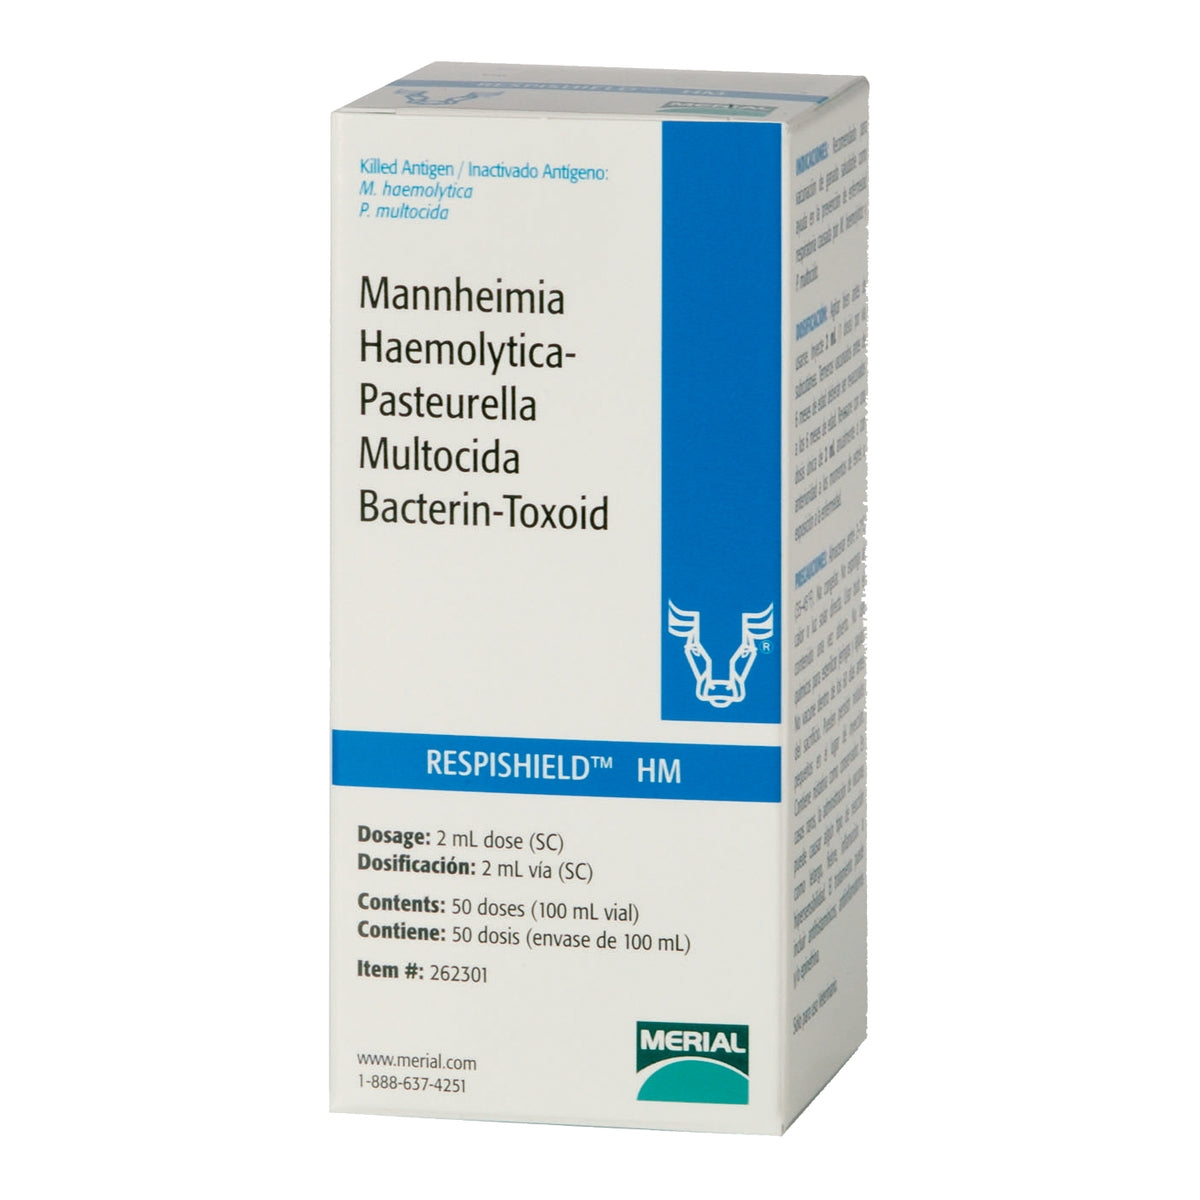 Respishield HM - 10 doses